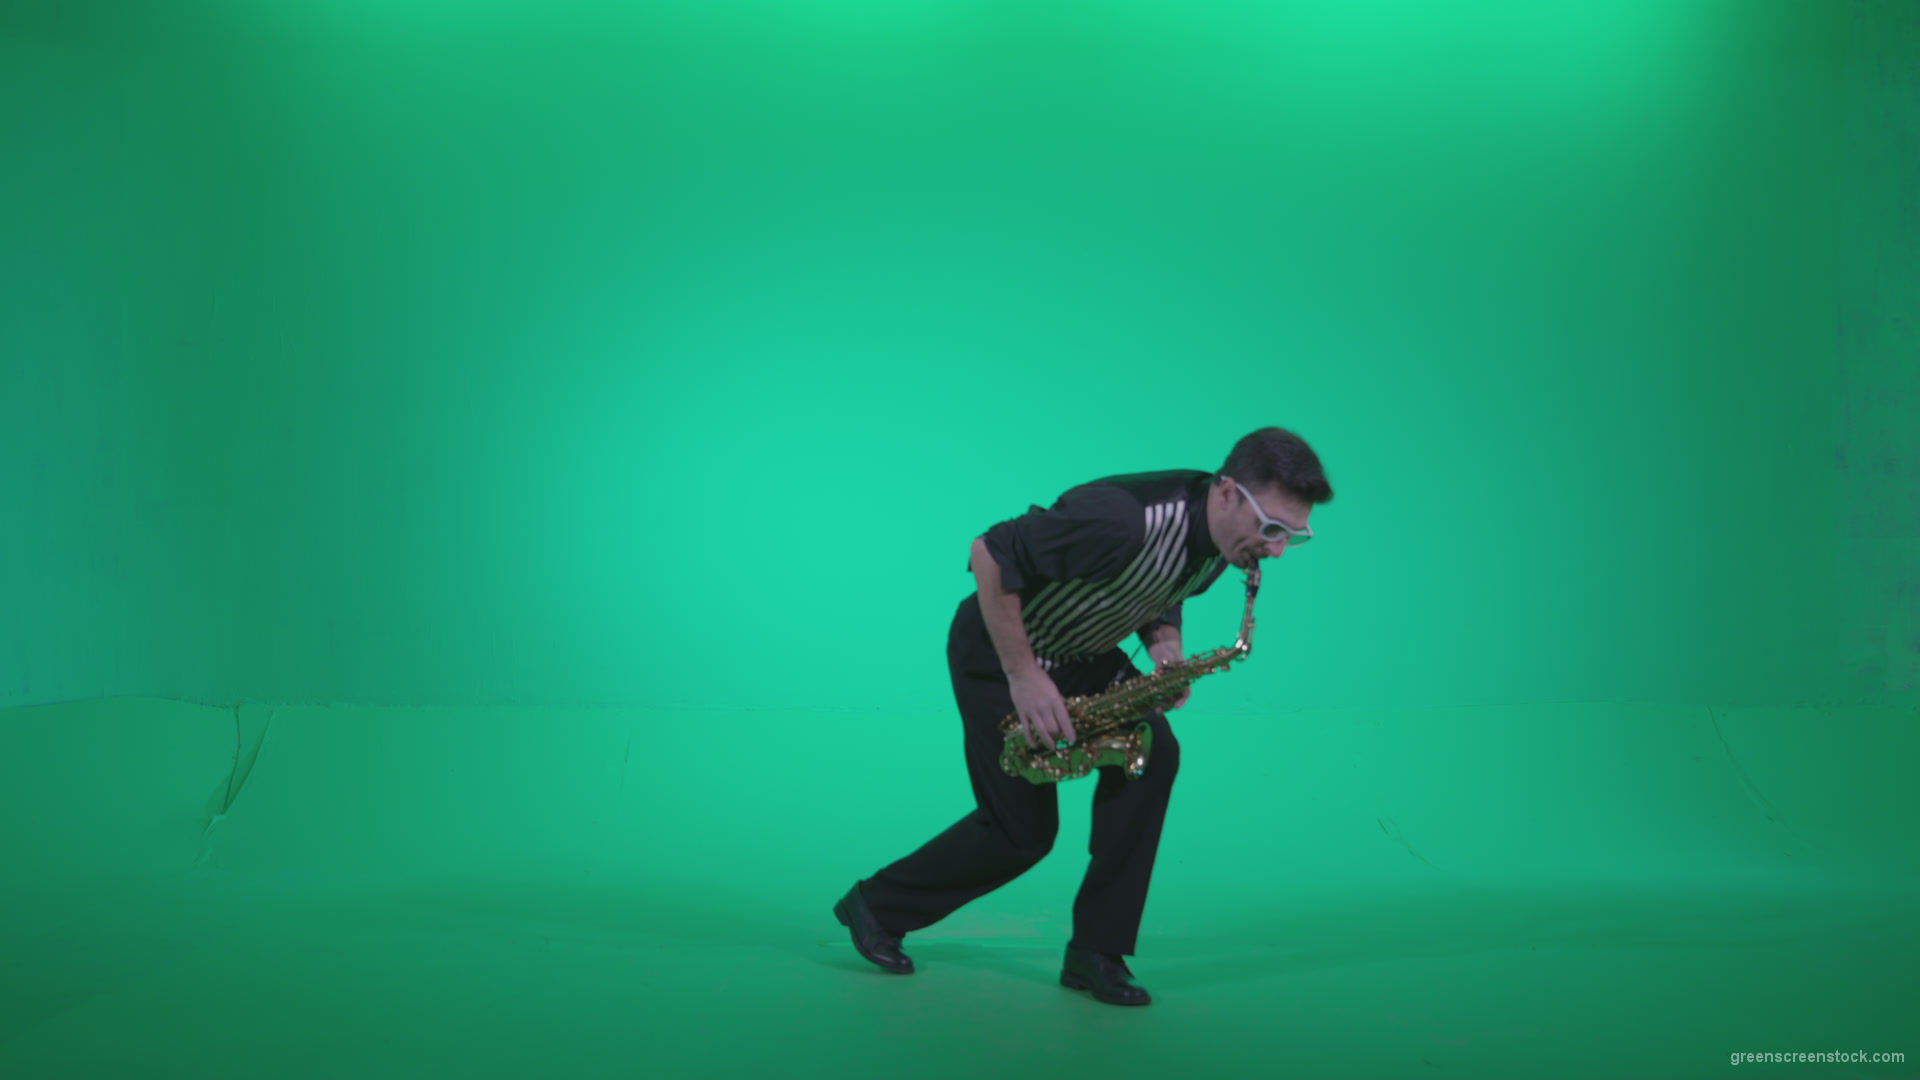 Saxophone-Virtuoso-Performer-s4_006 Green Screen Stock